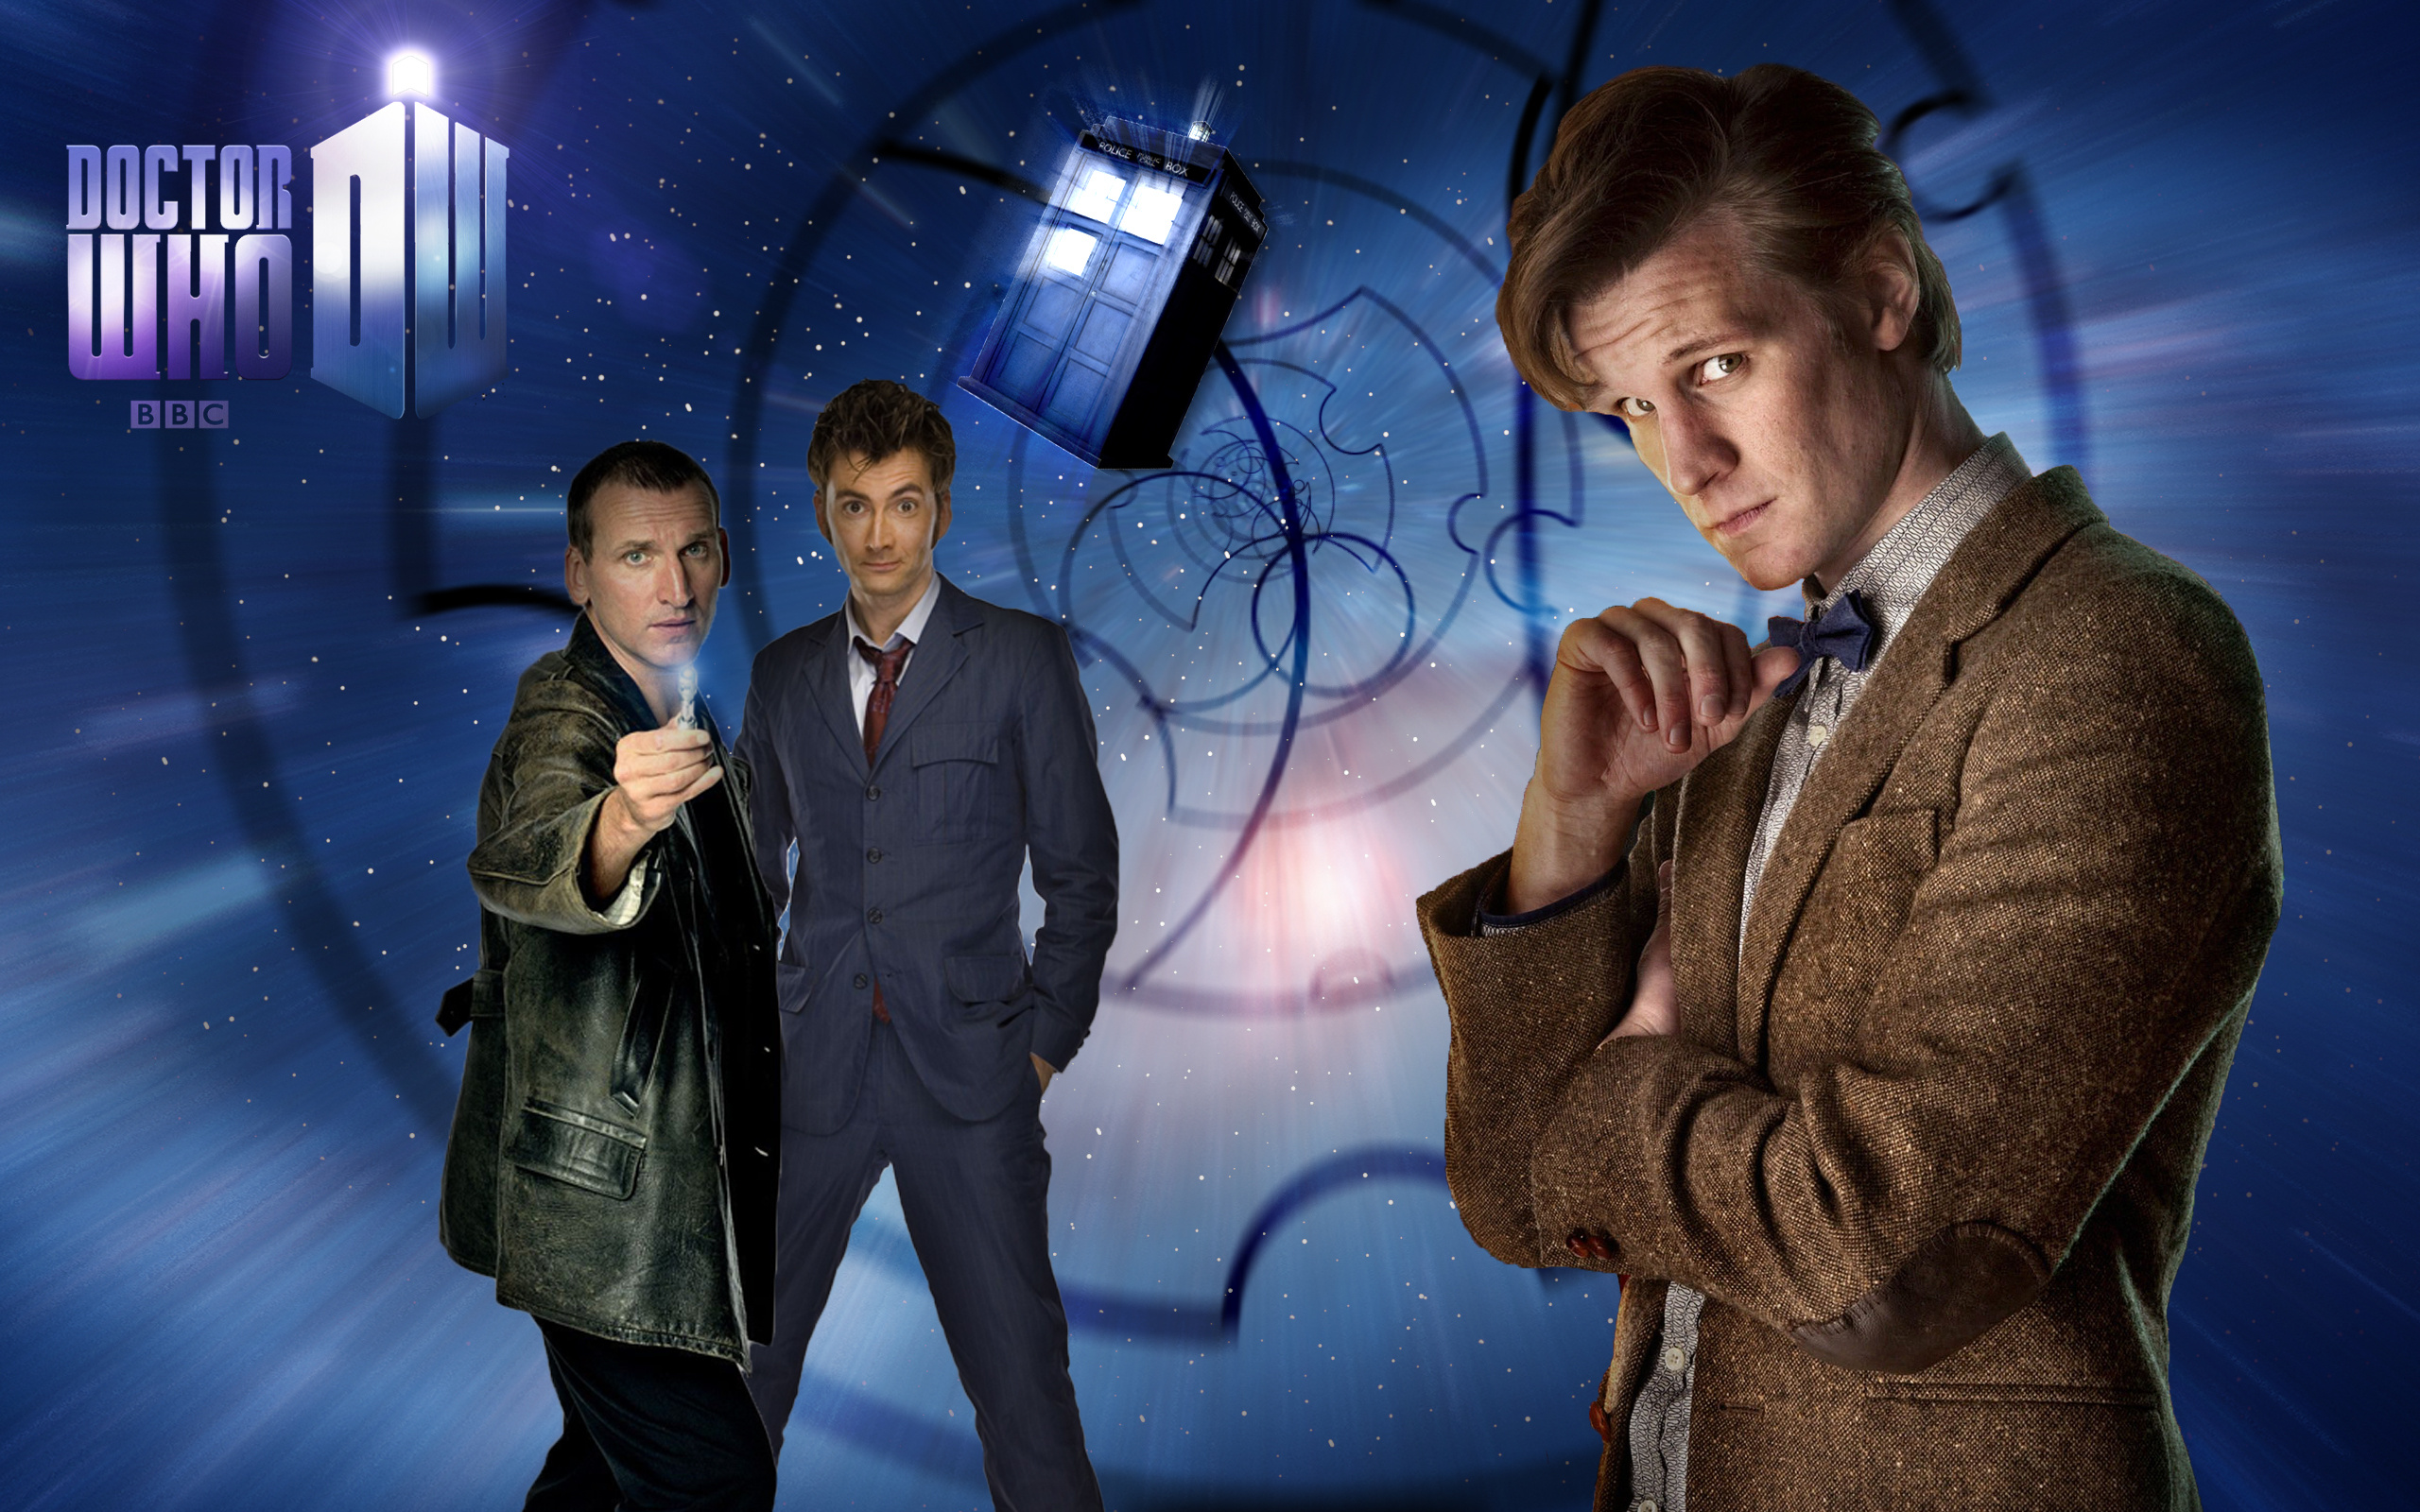 Captivating Doctor Who wallpaper, Unique designs, Artistic representation, Doctor Who enthusiasts, 2560x1600 HD Desktop